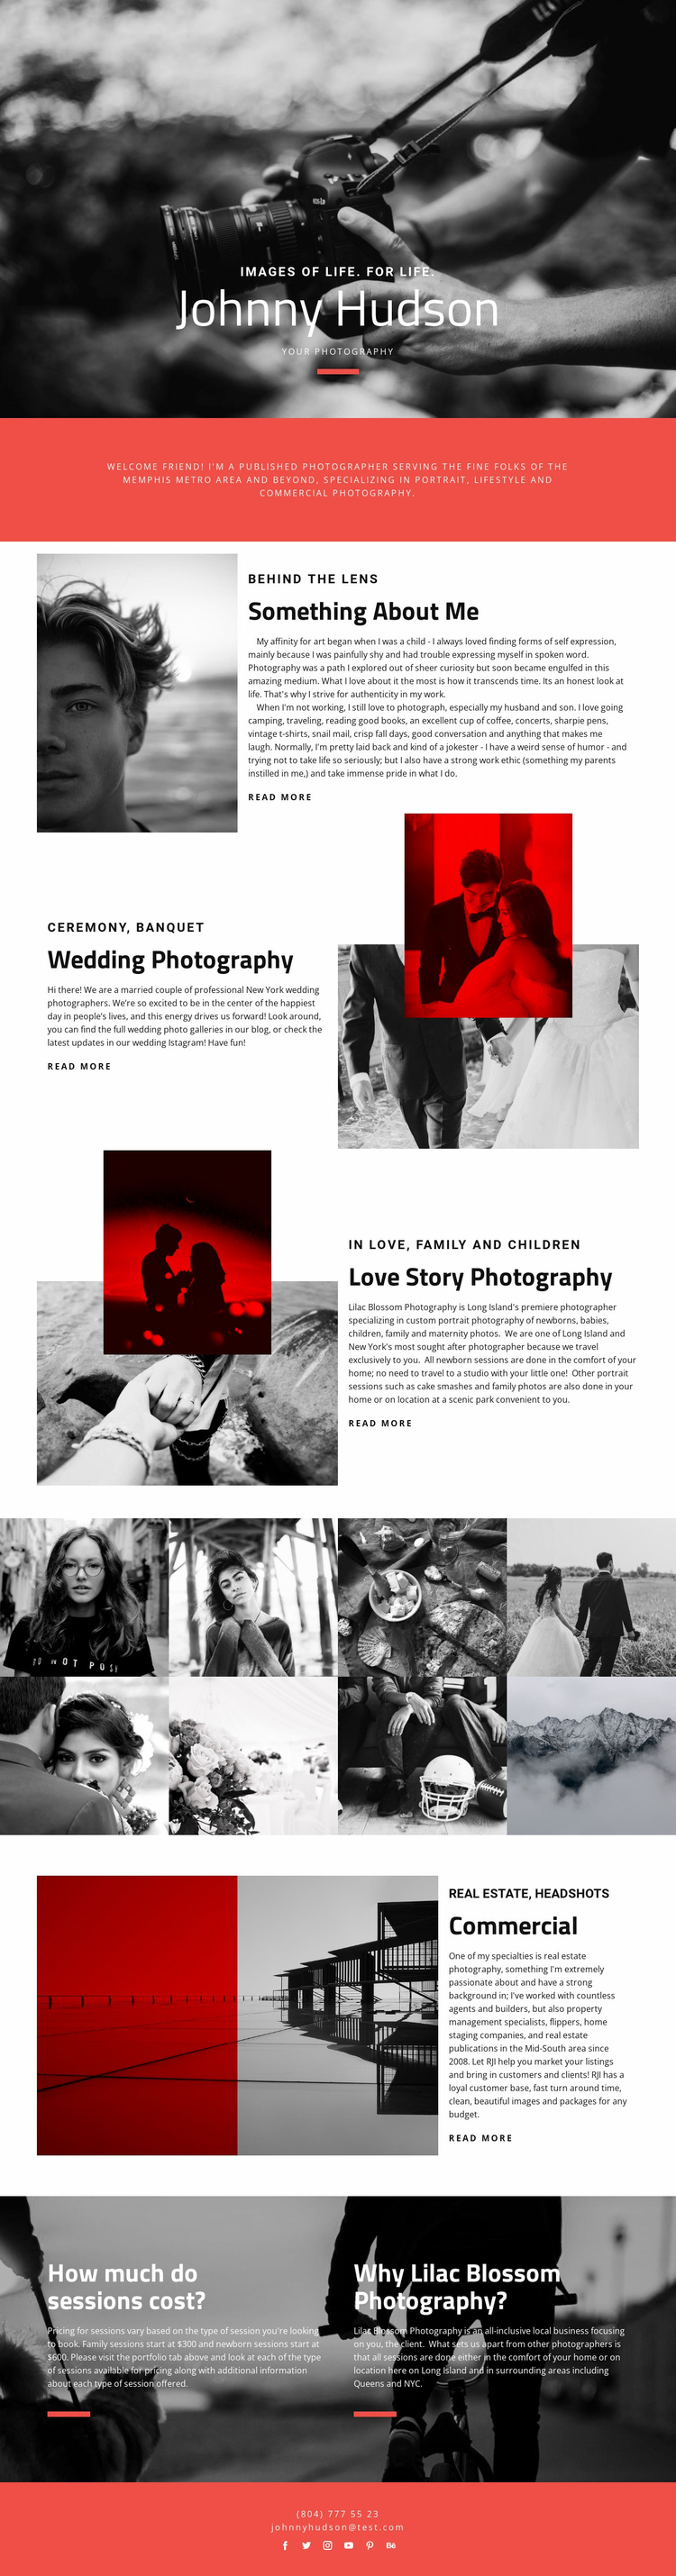 Photographer Website Template